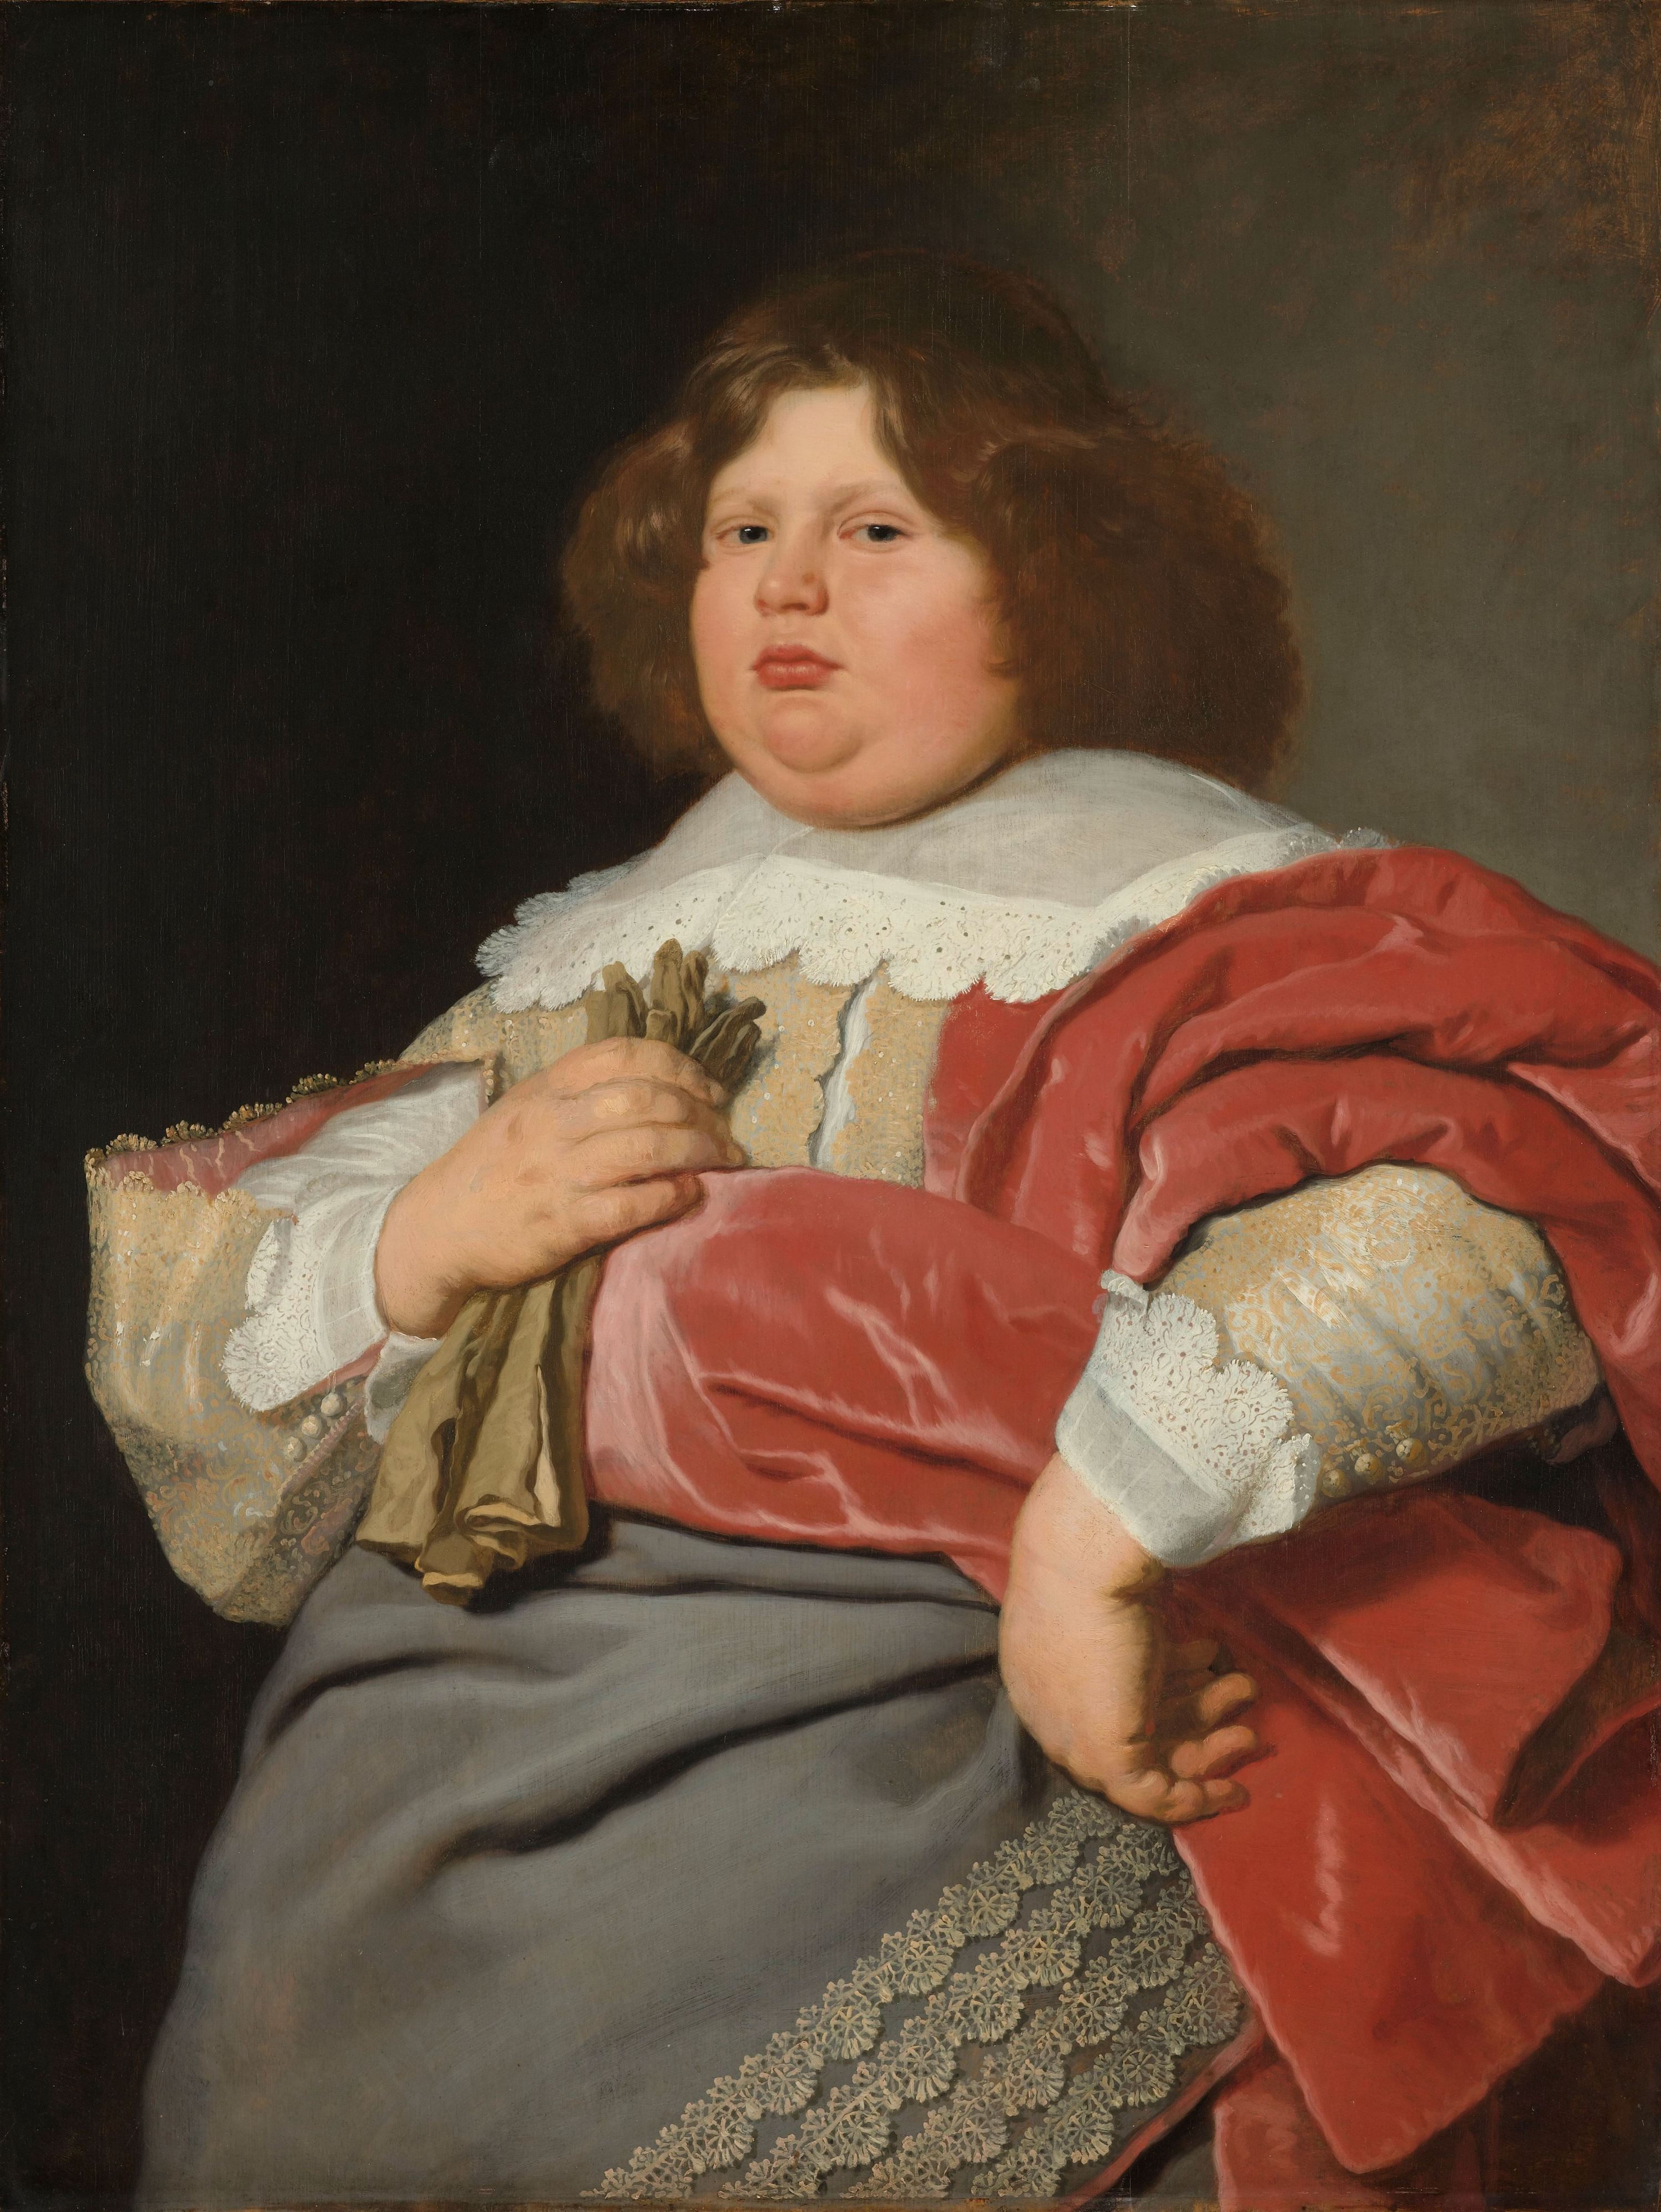 Portrait of Gerard Andriesz Bicker by Bartholomeus van der Helst - c. 1642 - 94 x 117.5 cm Rijksmuseum